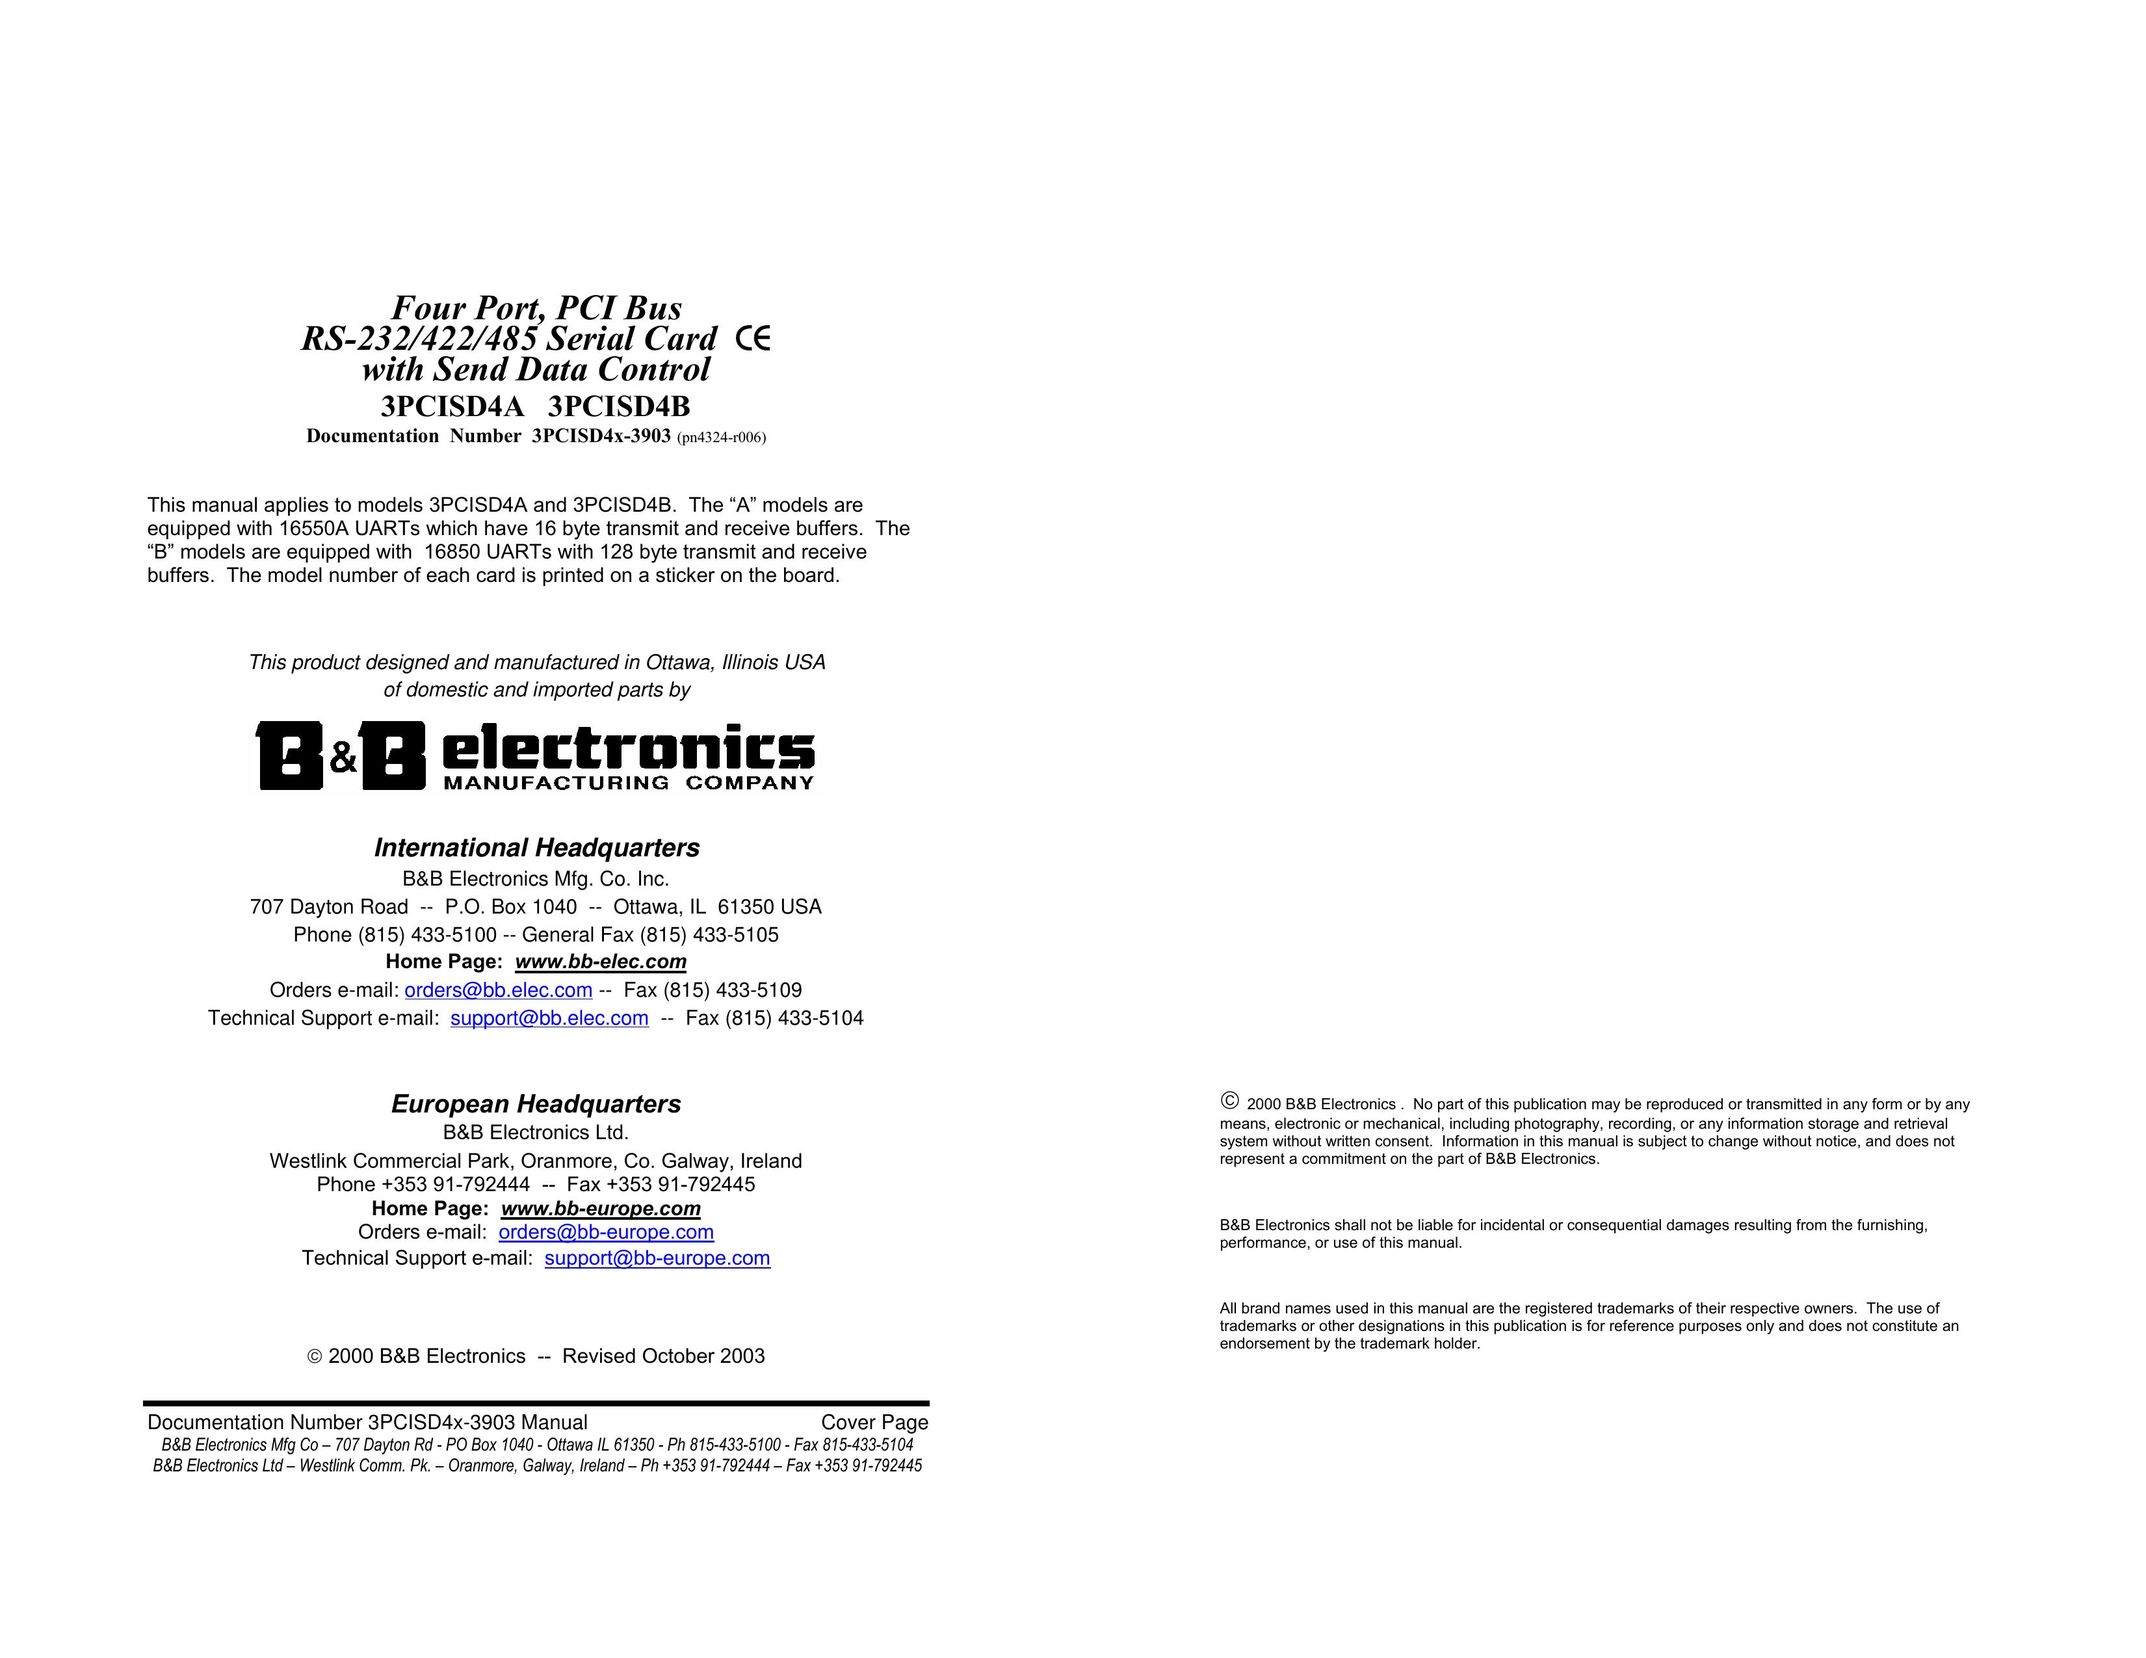 B&B Electronics 3PCISD4A Computer Accessories User Manual